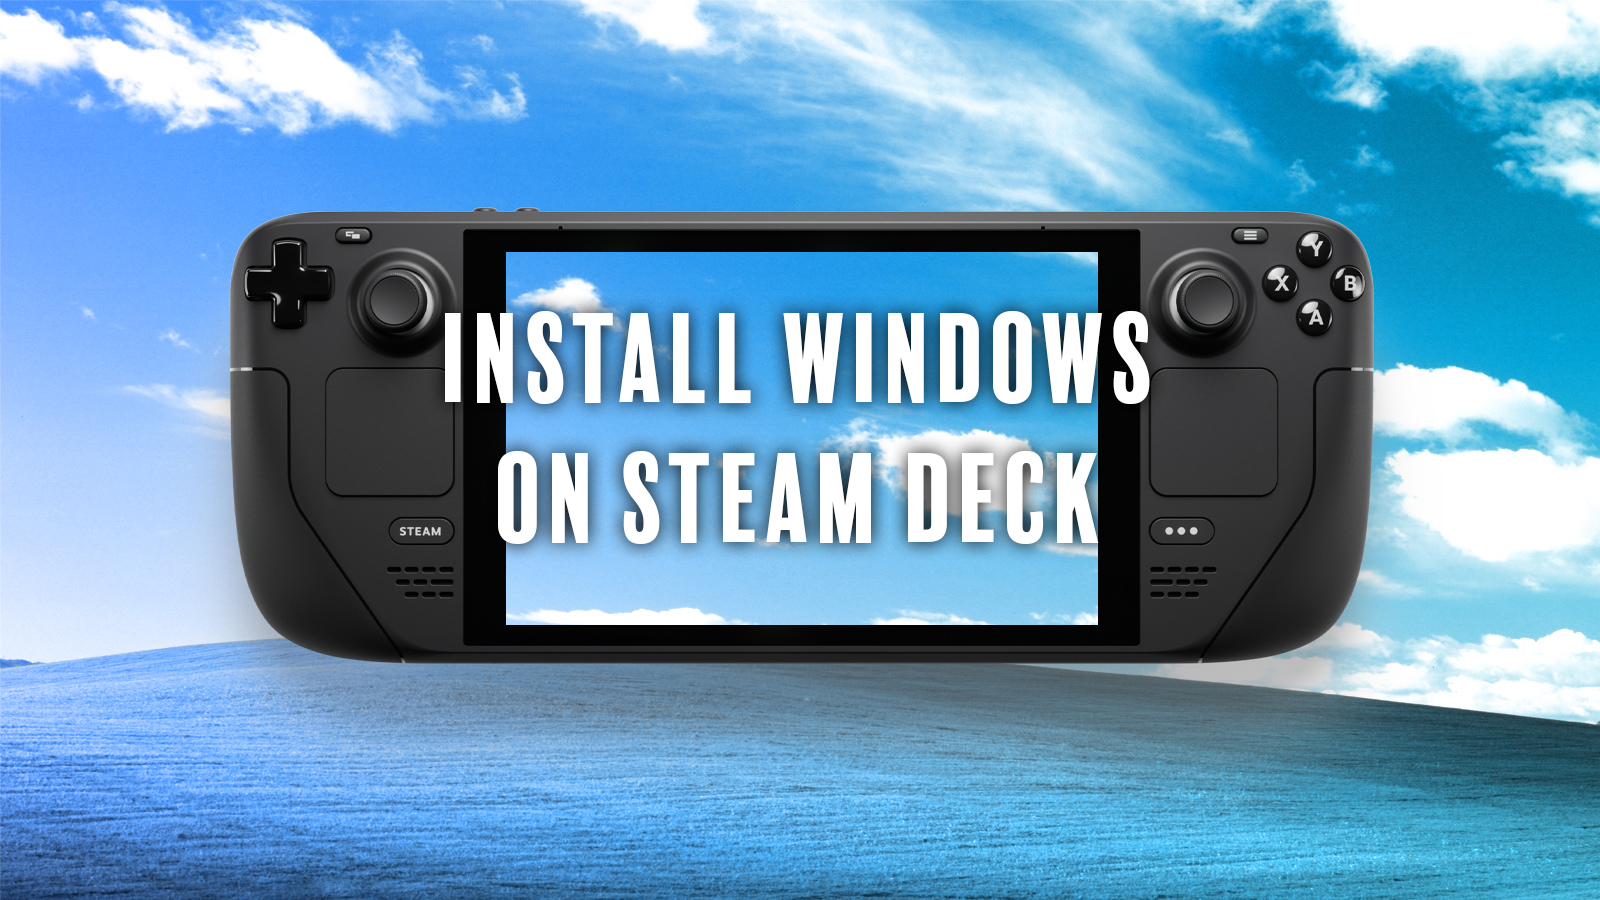 Valve's Steam Deck can now run Windows